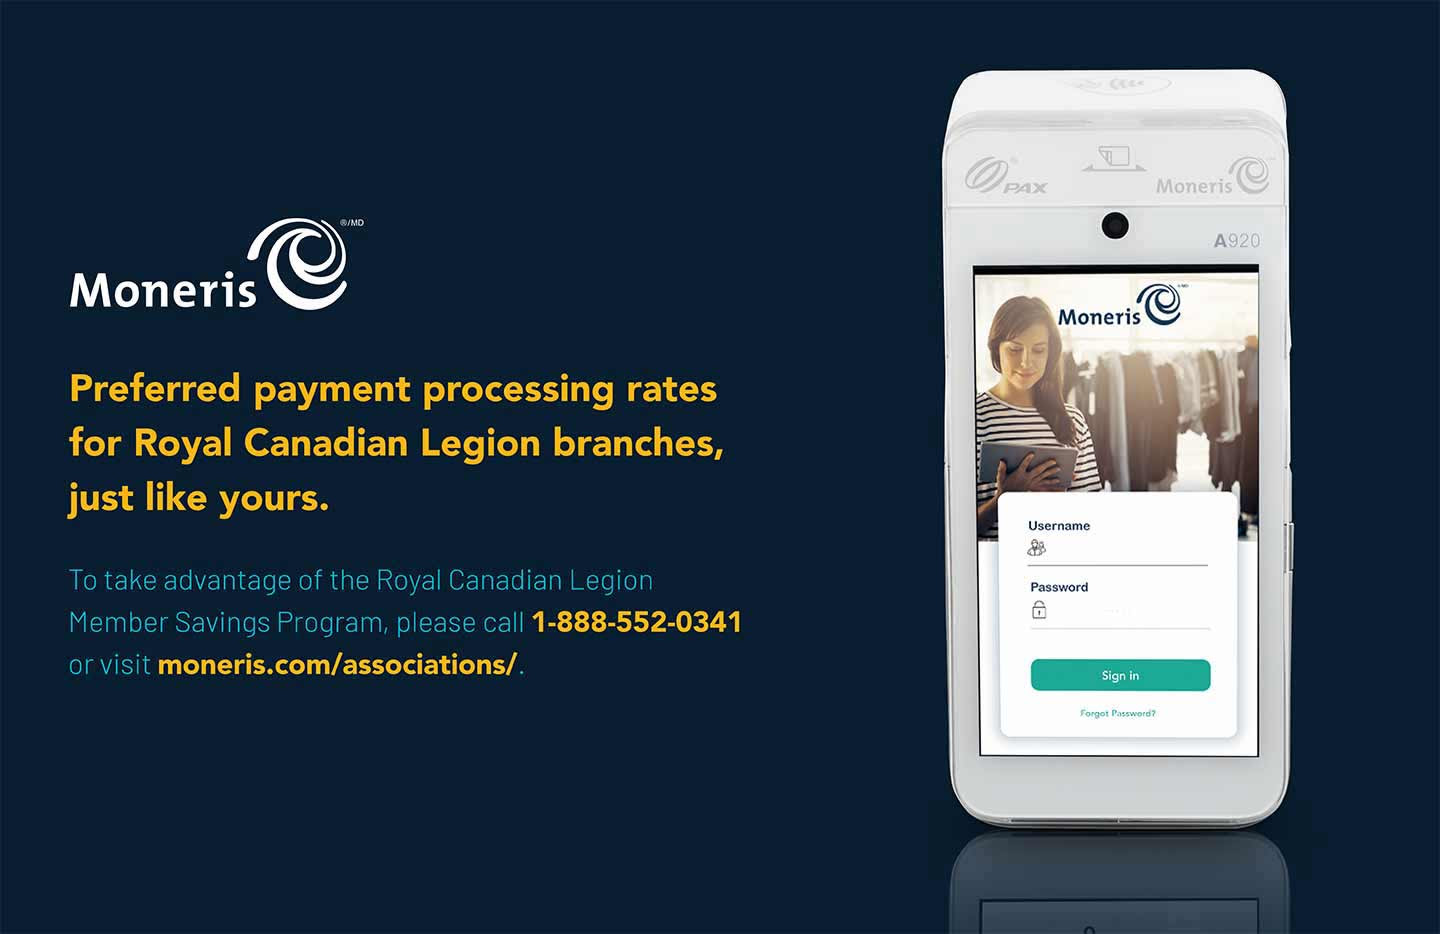 Moneris. To take advantage of the
Royal Canadian Legion Member Savings
Program, visit moneris.com/associations.